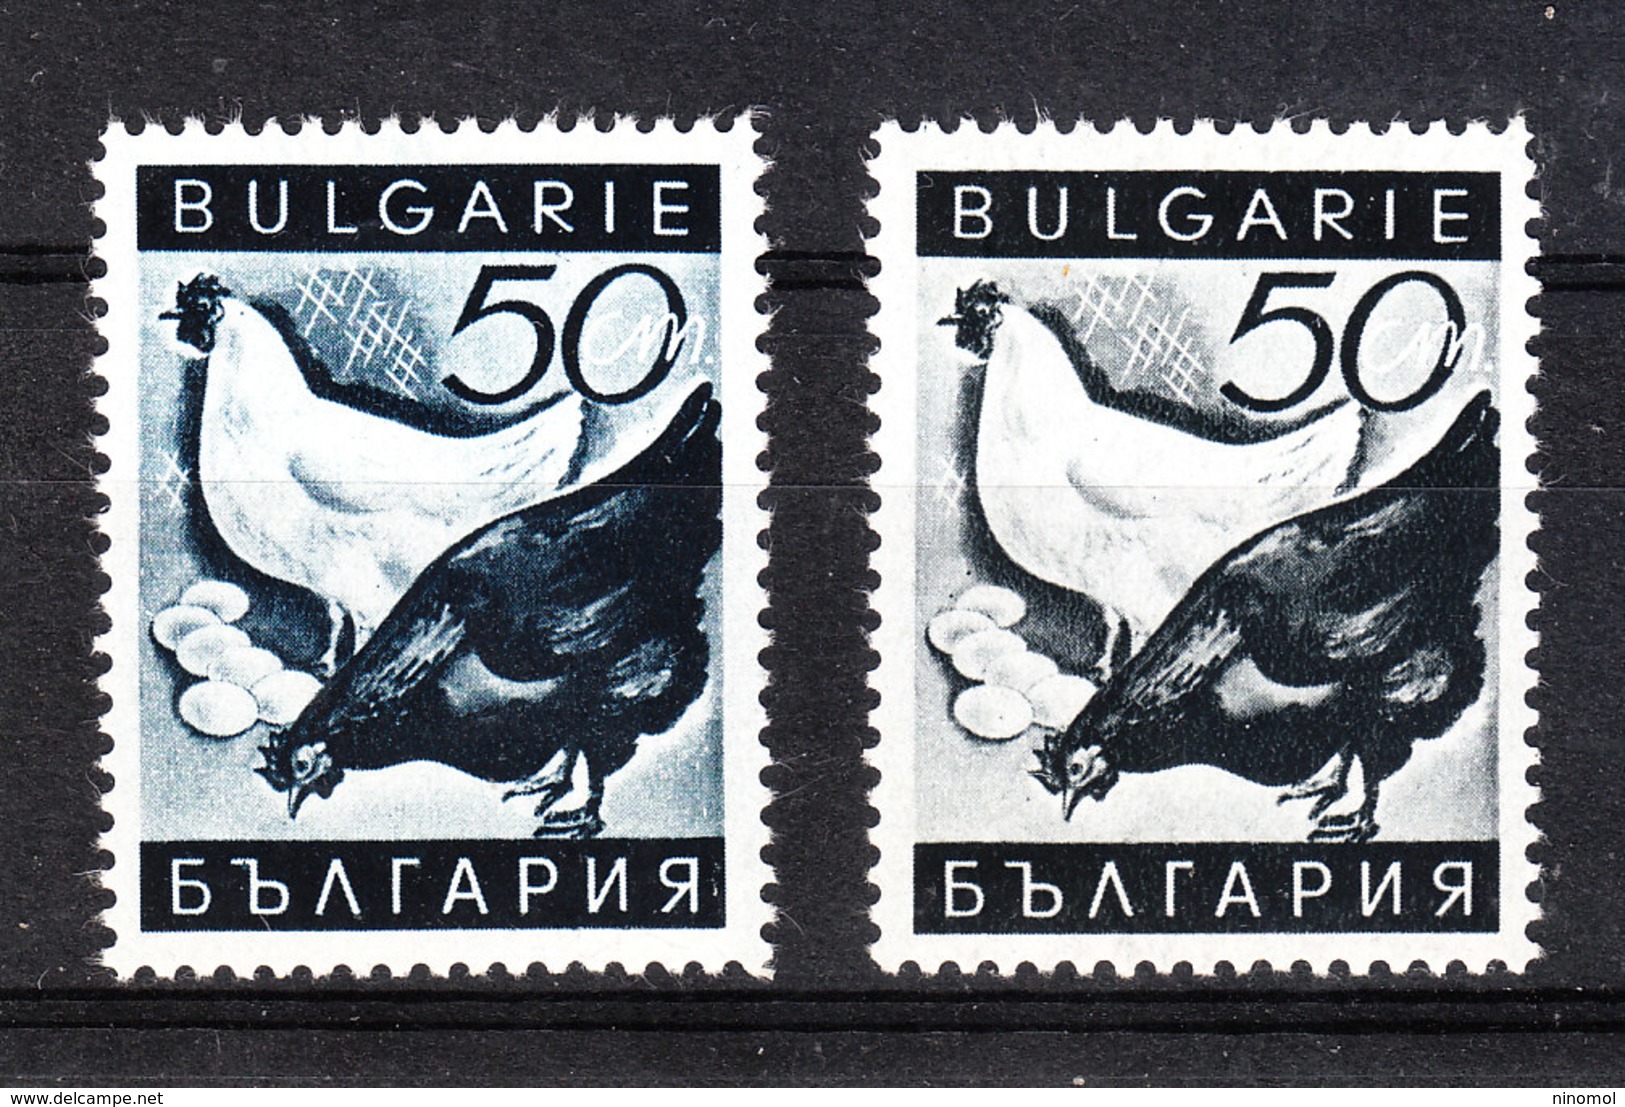 Bulgaria - 1938. Galline. I 2 Soli Francobolli Della Serie" Animali ". Hens. Only 2 Stamps Of The Series "Animals".MNH - Hühnervögel & Fasanen